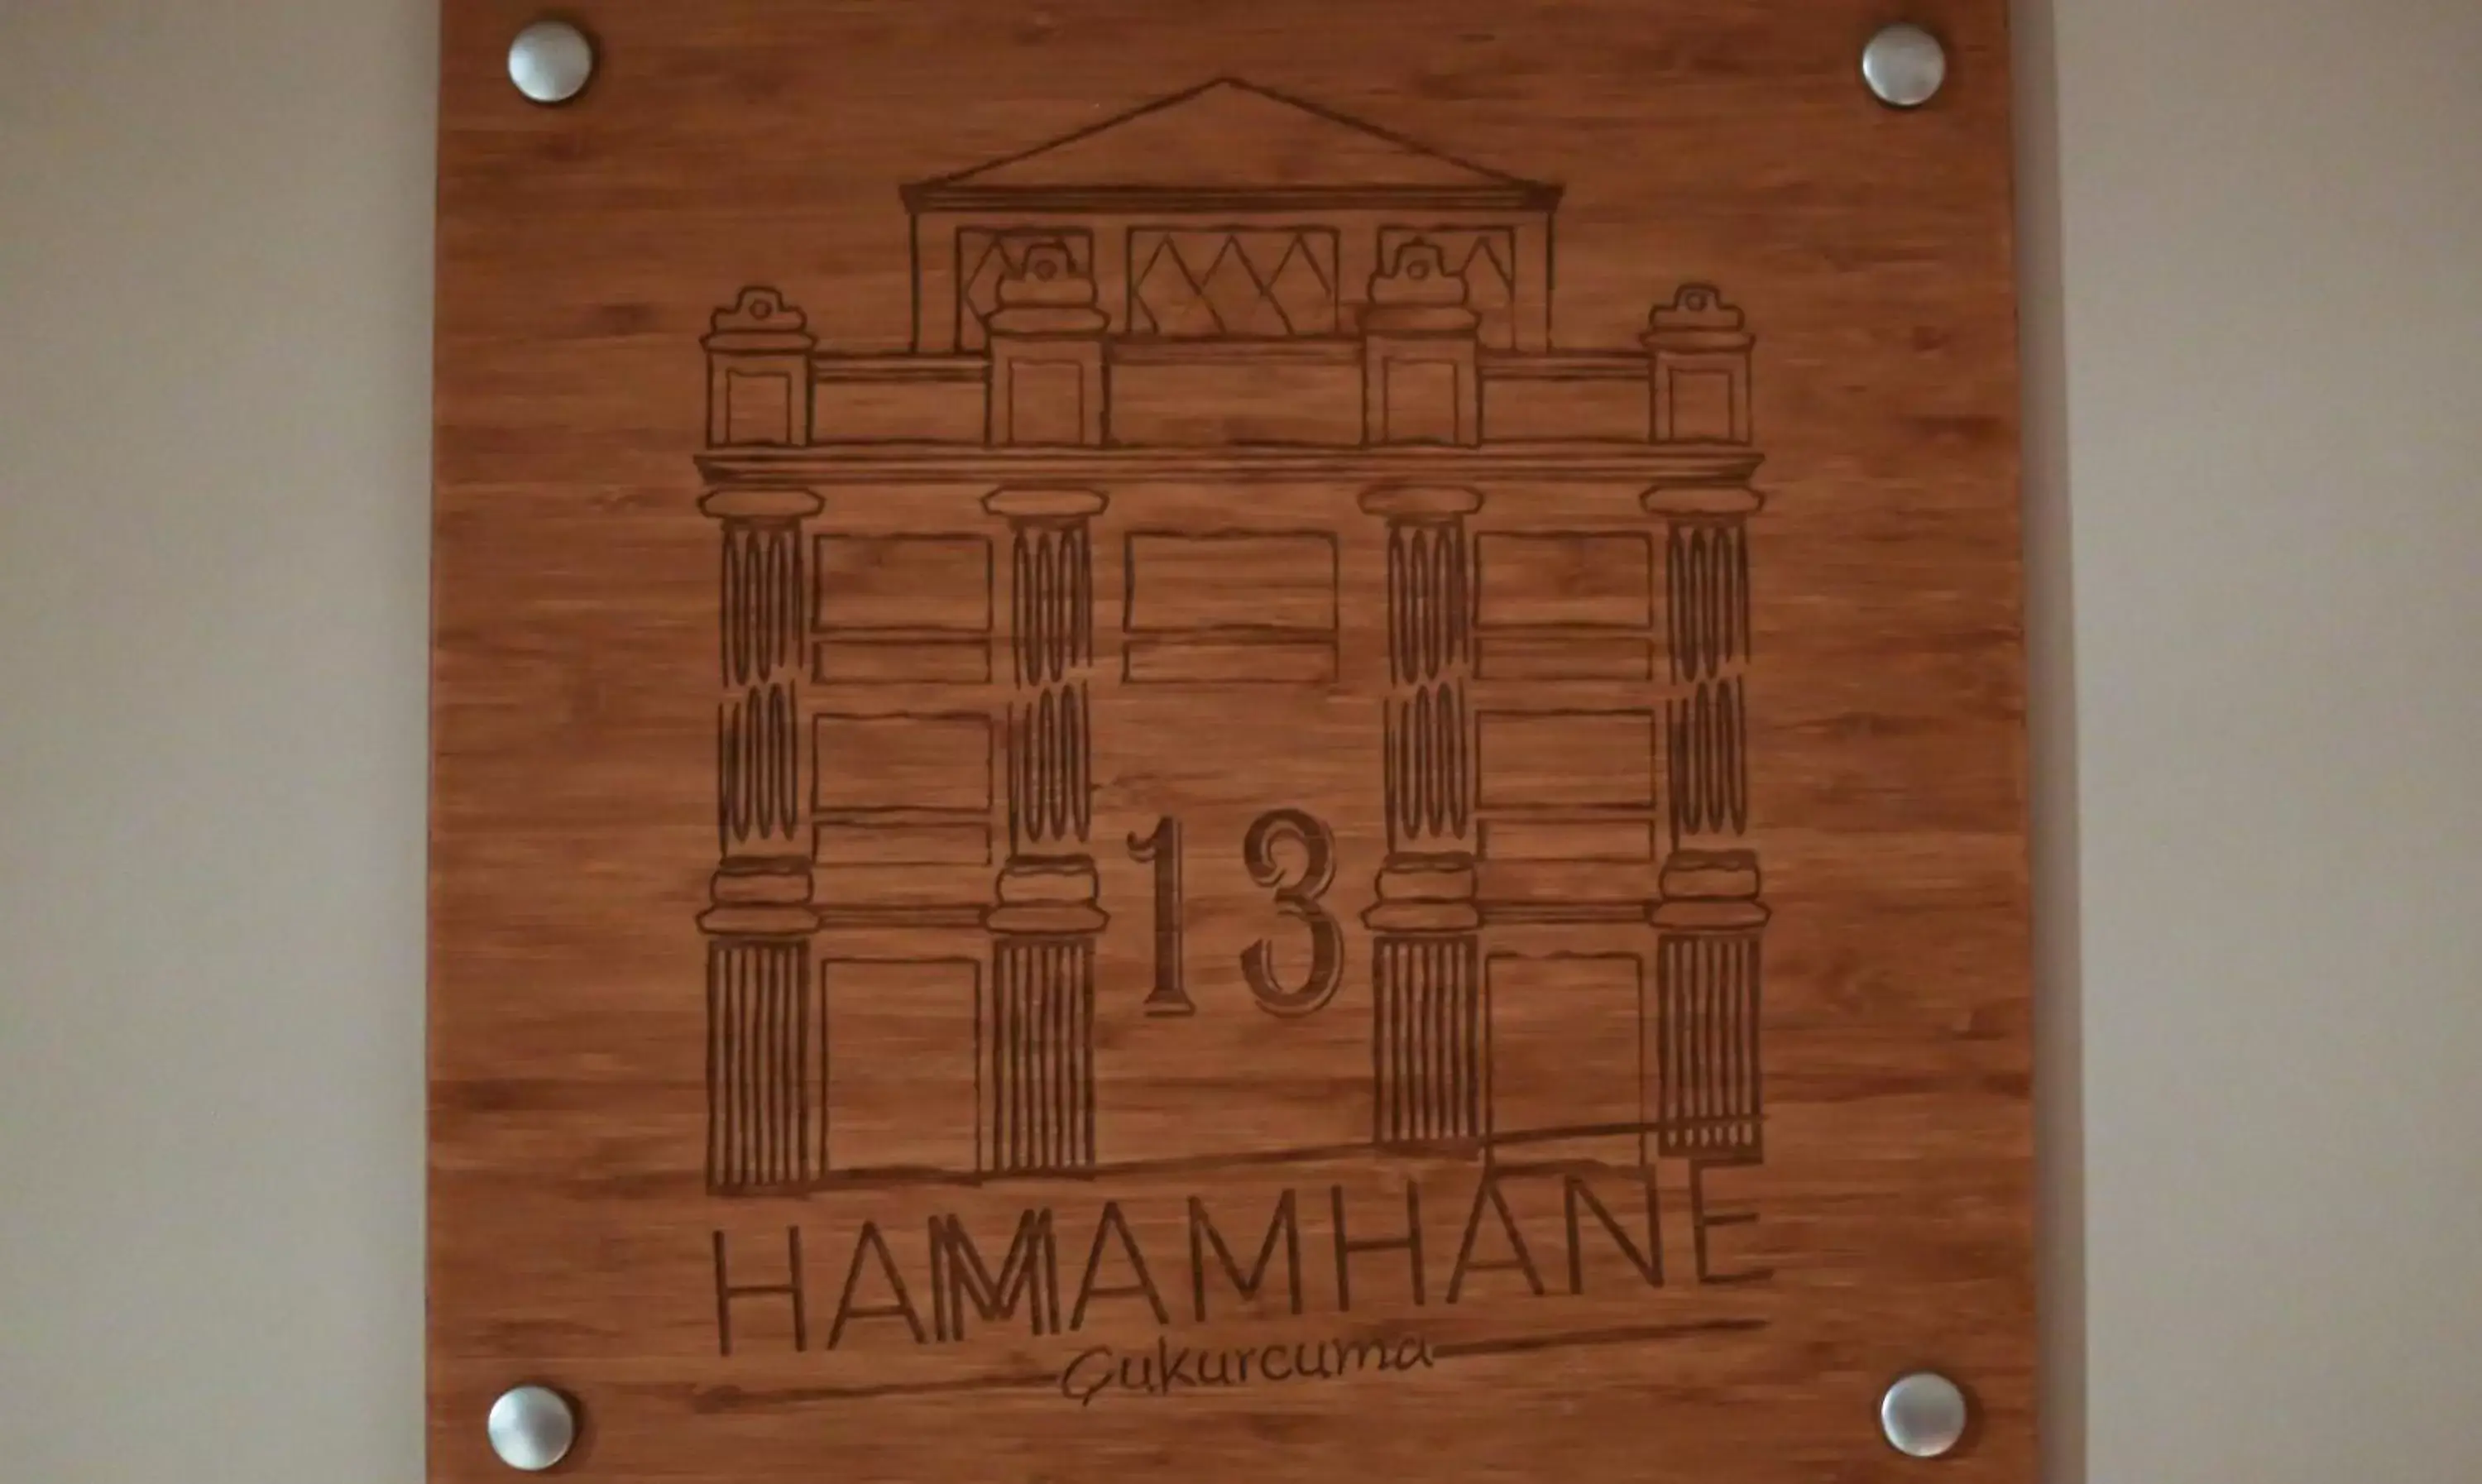 Decorative detail in Hammamhane